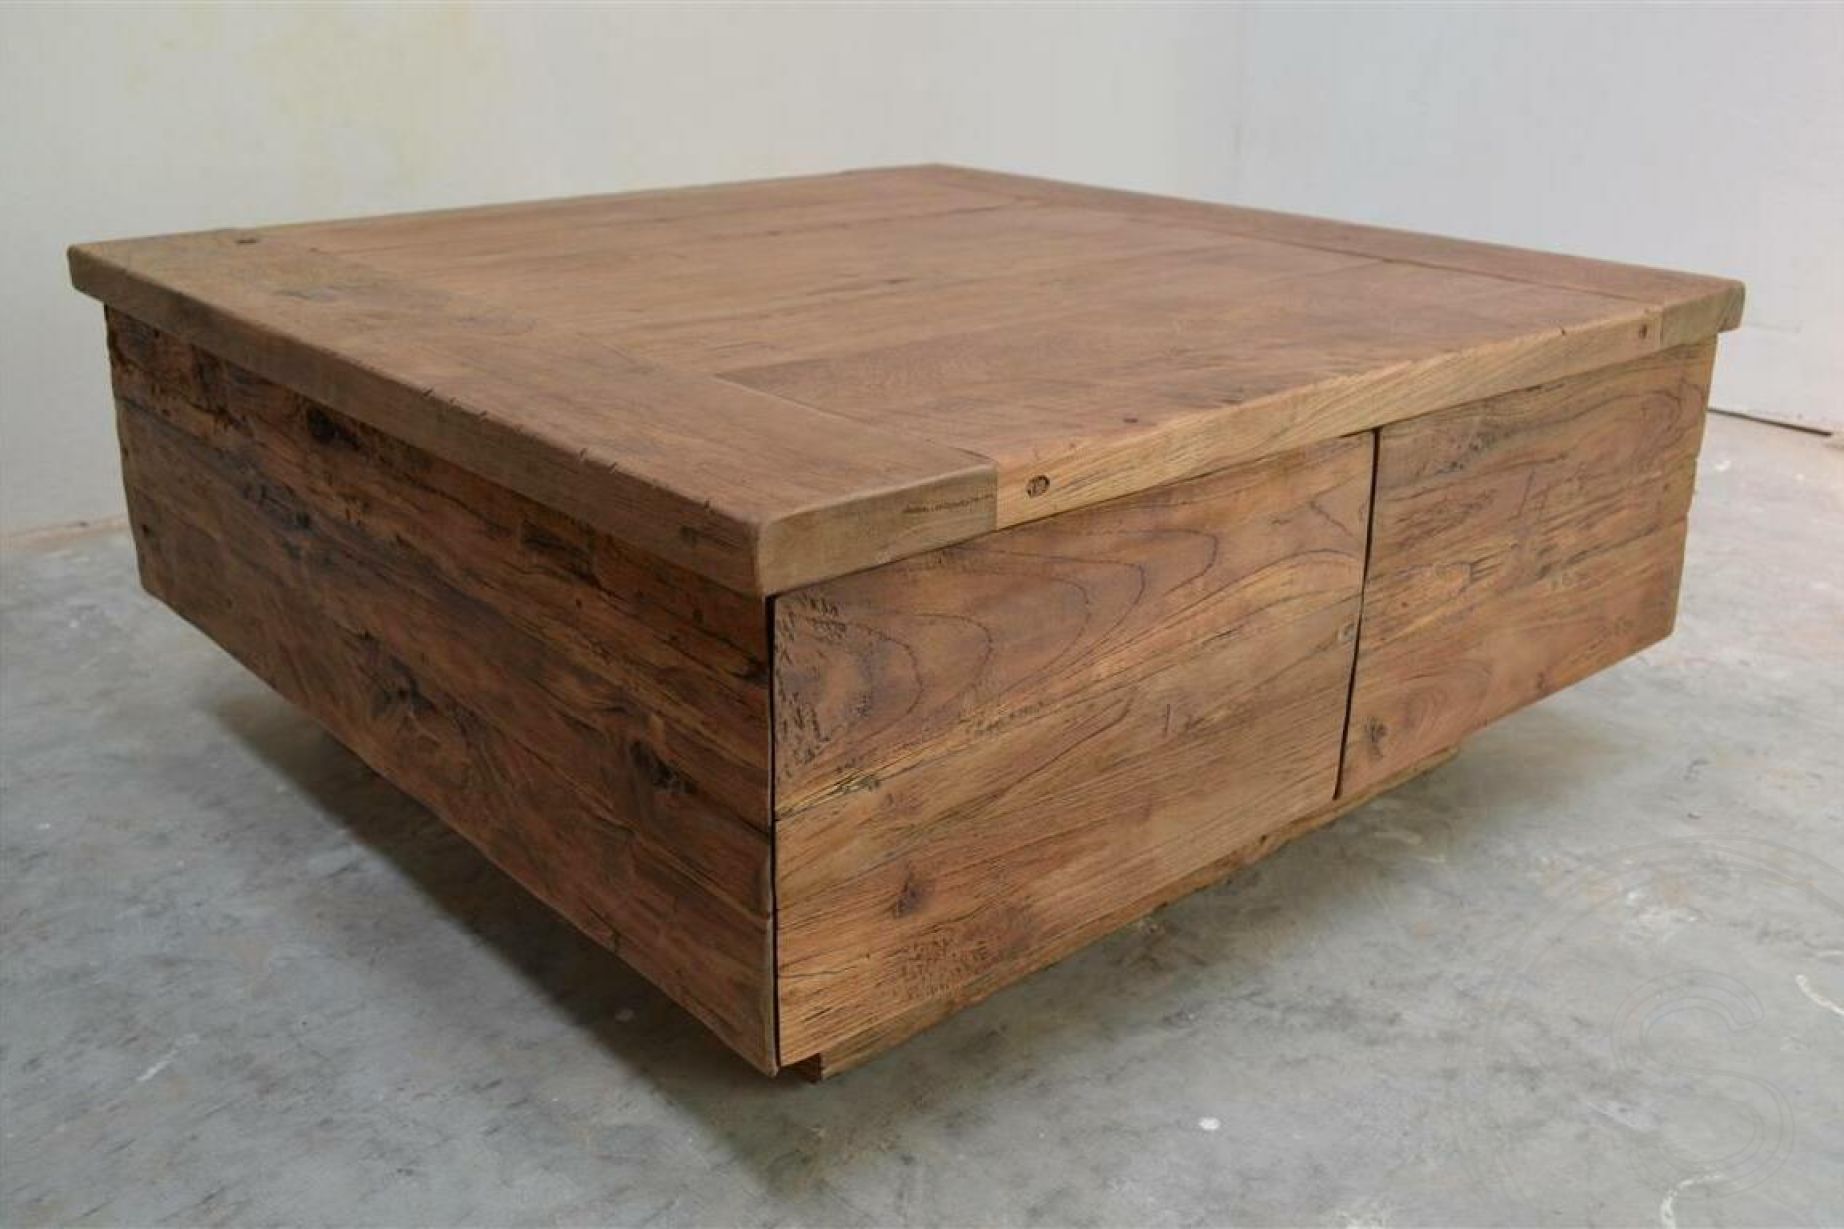 Ampère ironie sensatie Teak blok salontafel 80x80 oud hout